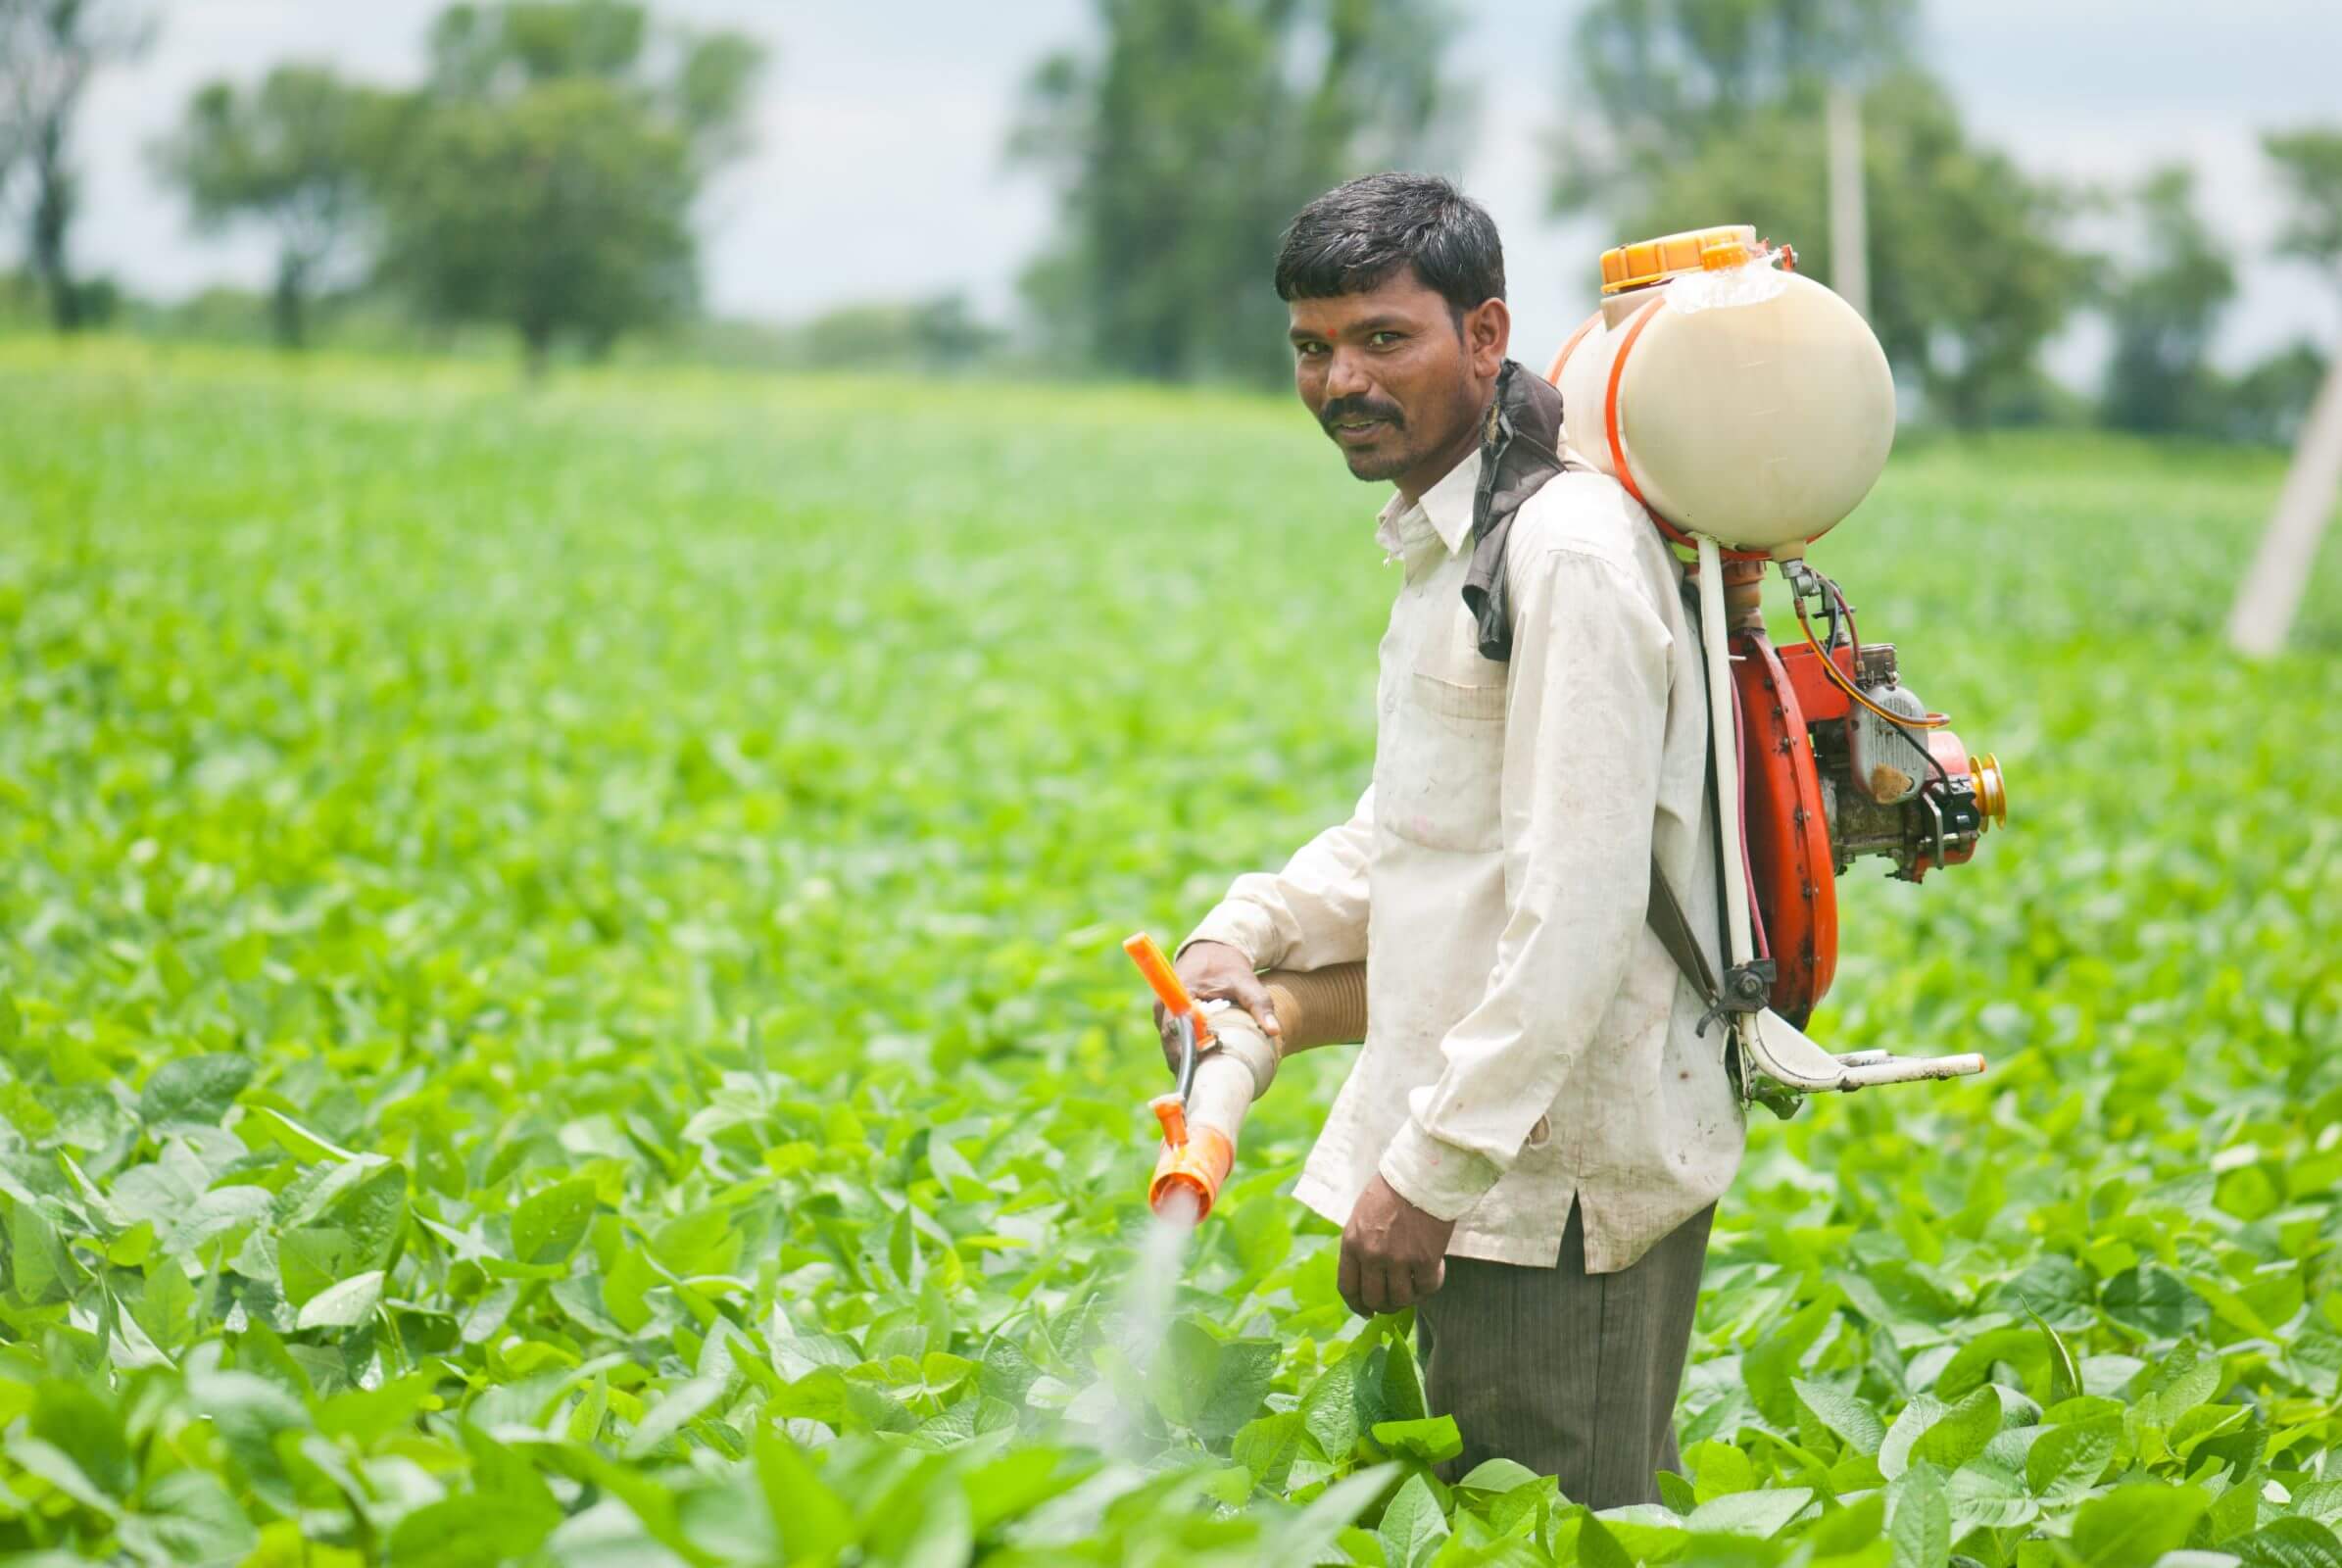 A farmer spraying a pesticide in his field